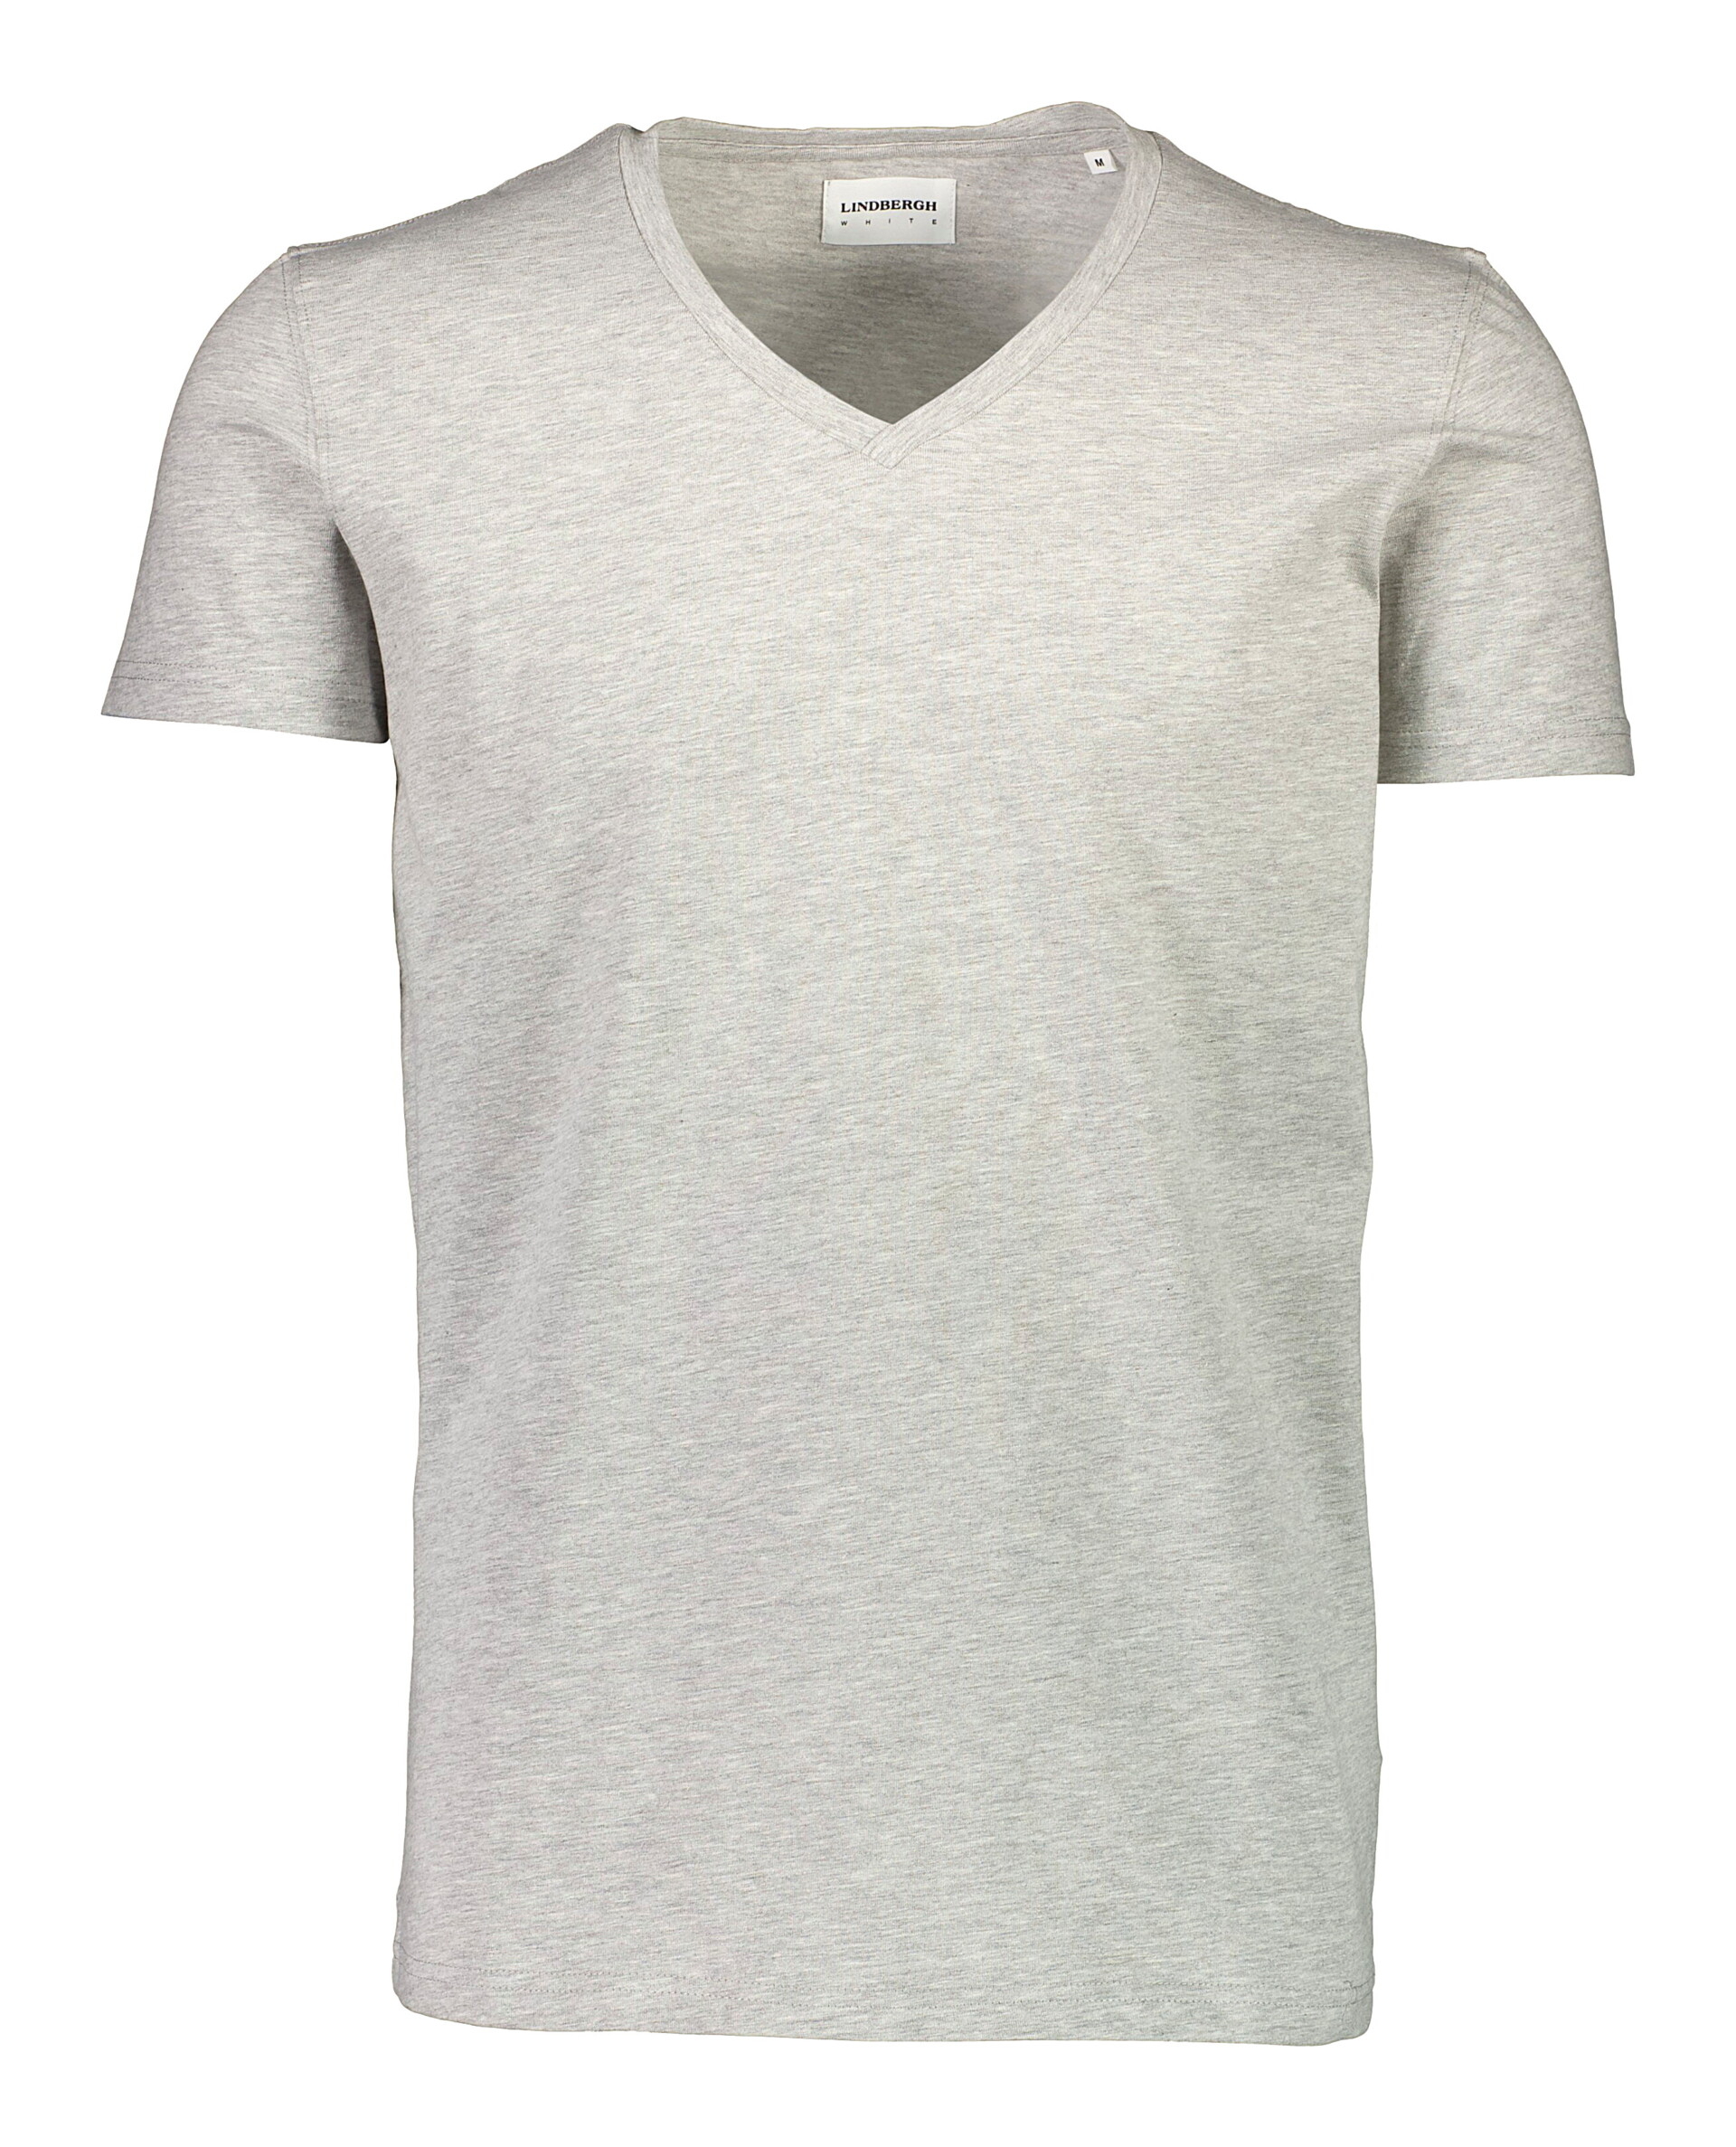 Lindbergh T-shirt grijs / grey mel